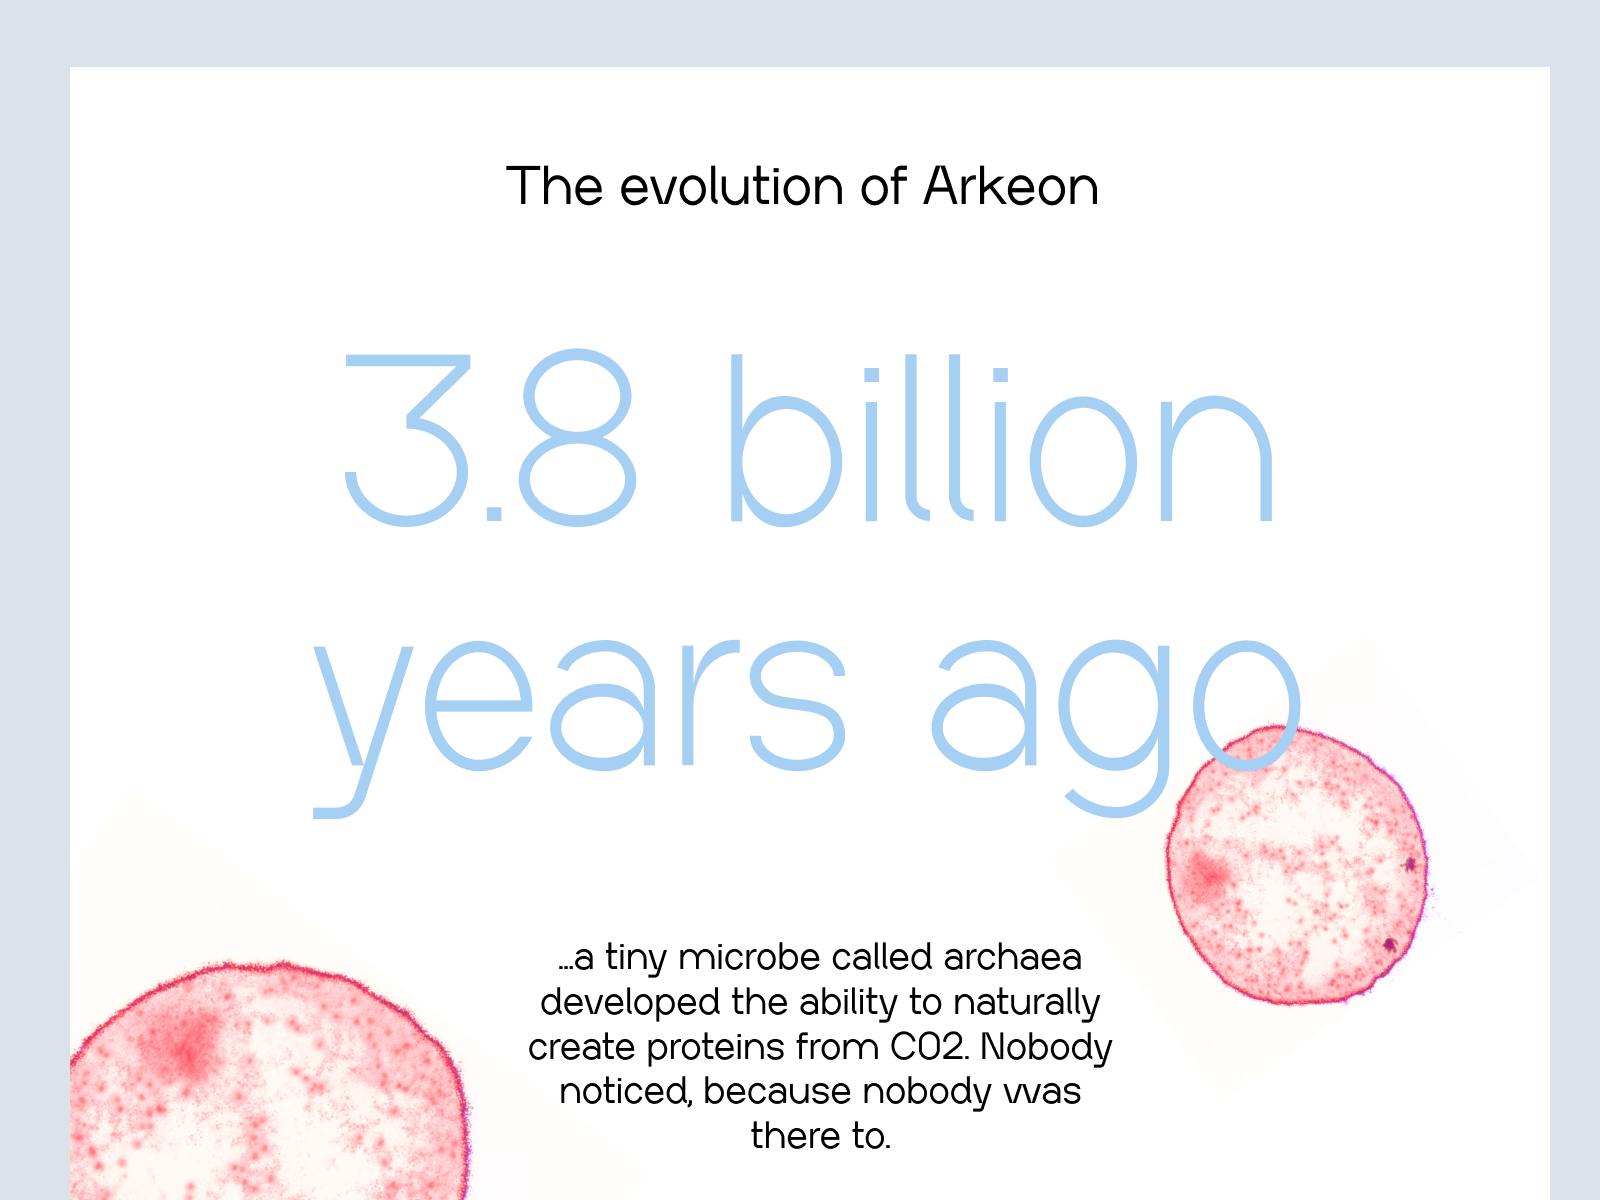 Arkeon started 3.8 billion years ago